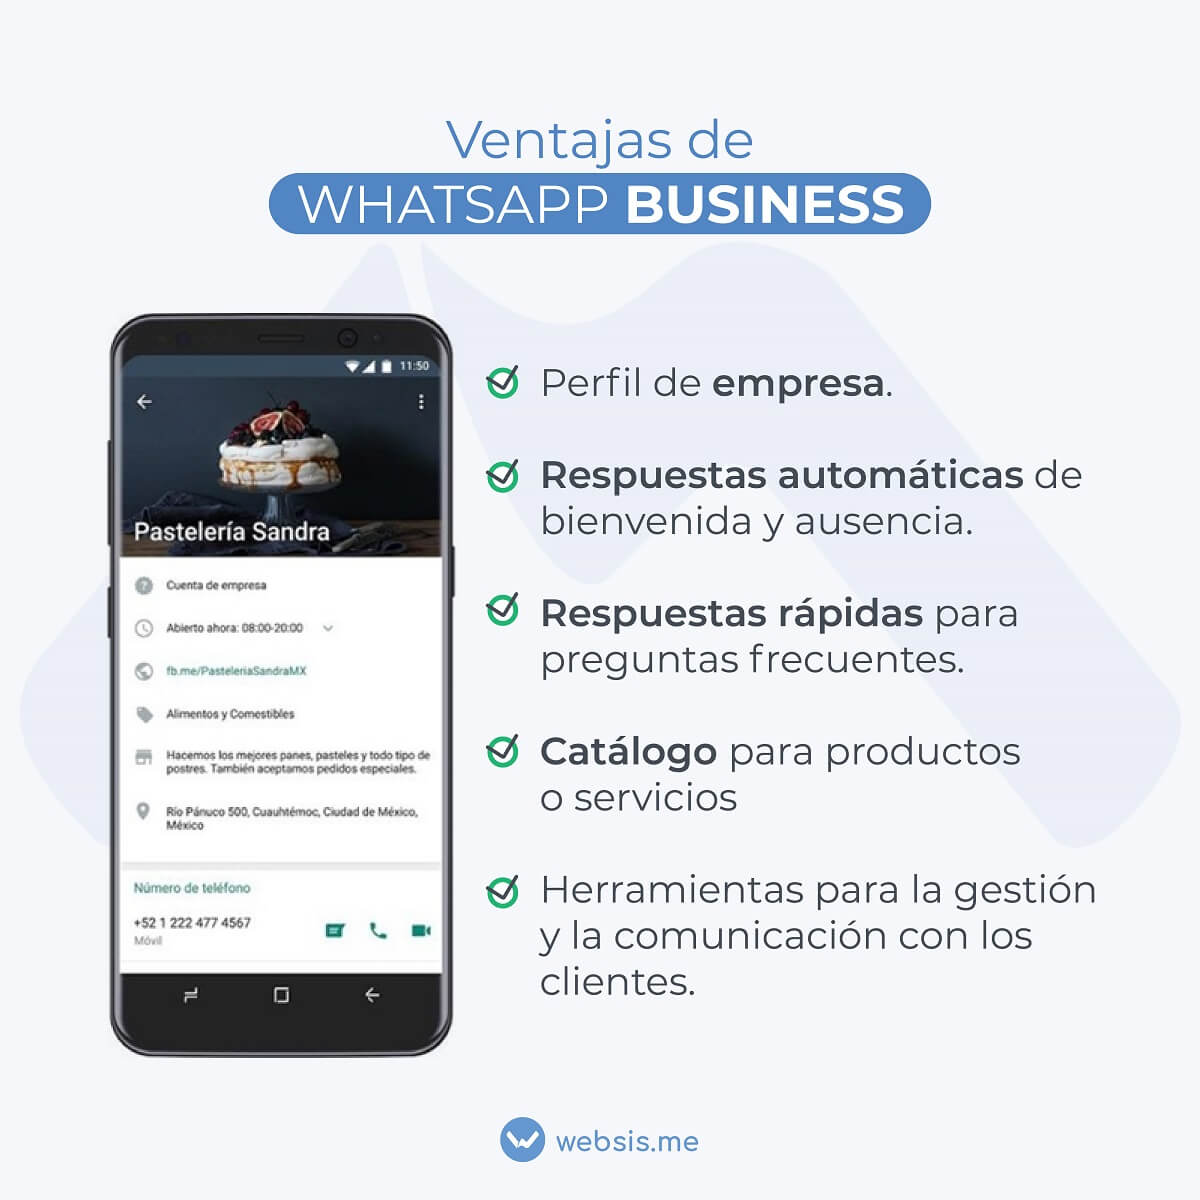 Ventajas de whatsapp business